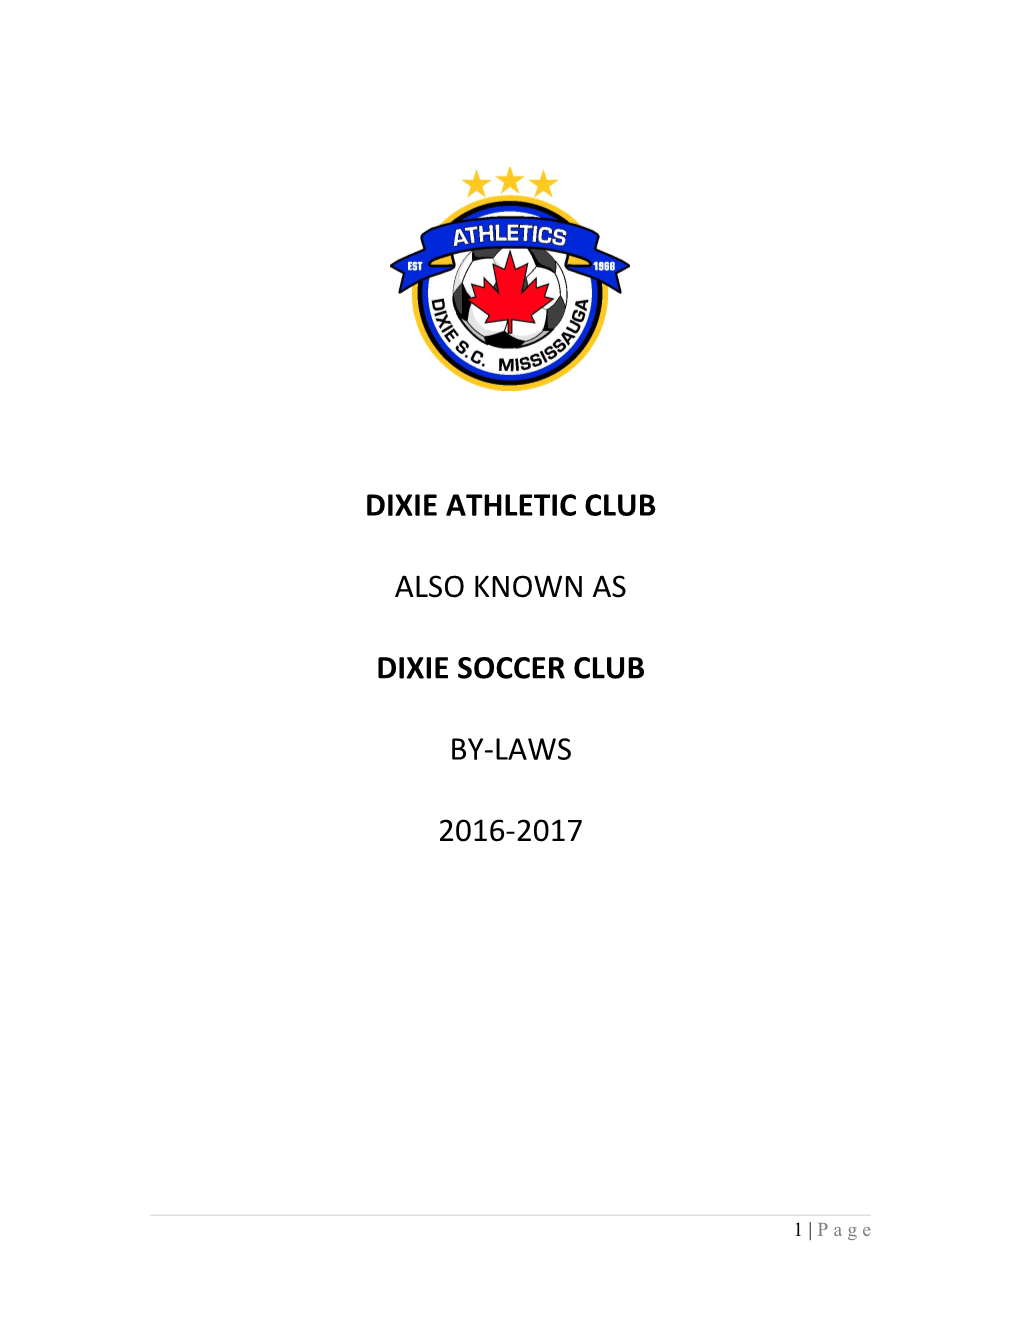 Dixie Athletic Club